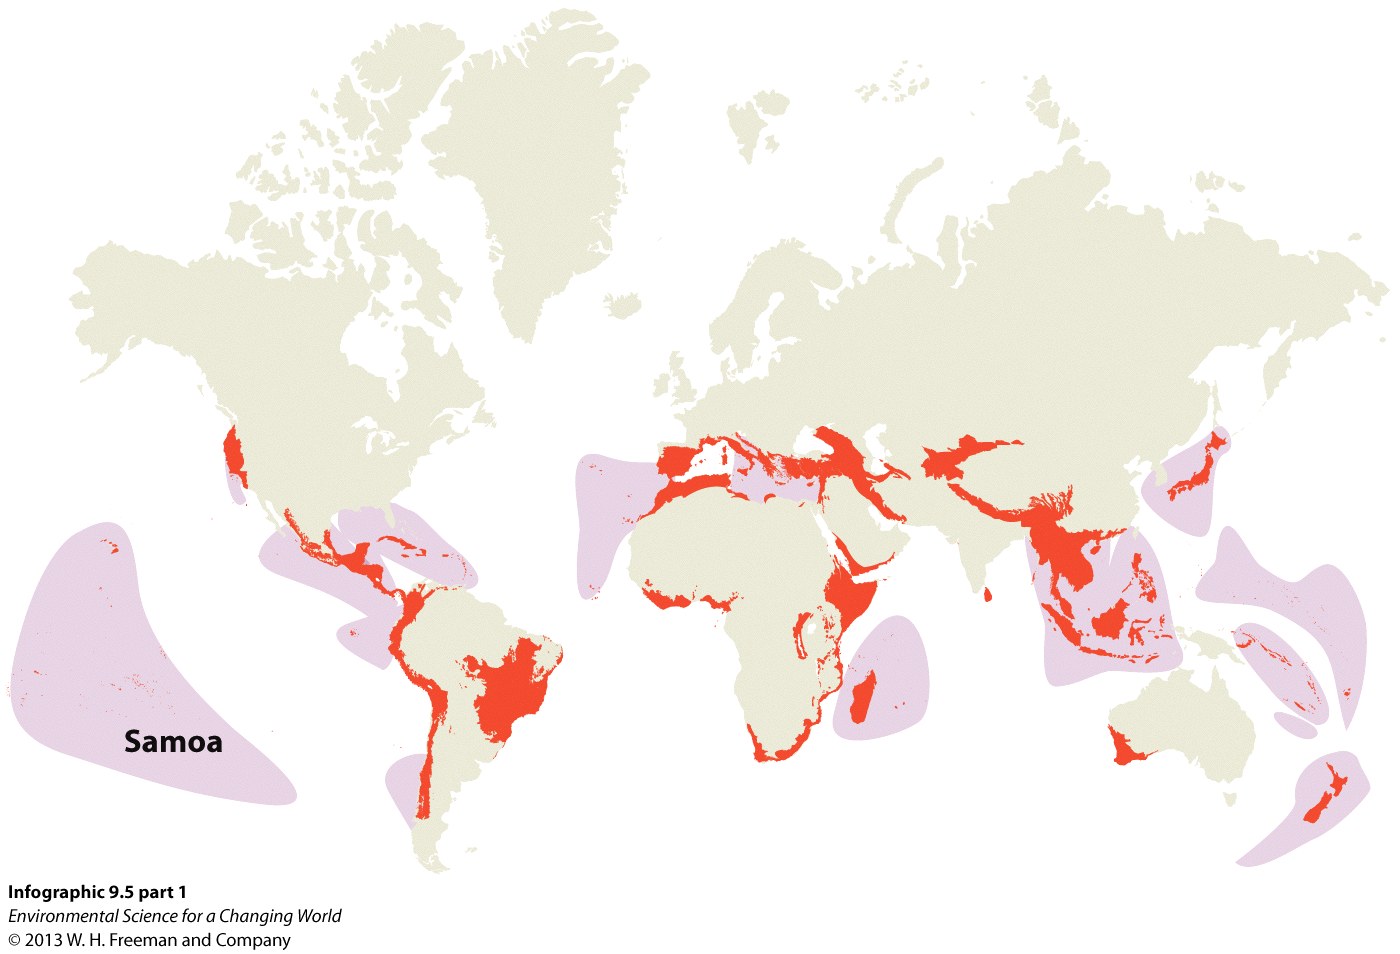 Infographic 9.5: Biodiversity Hotspots